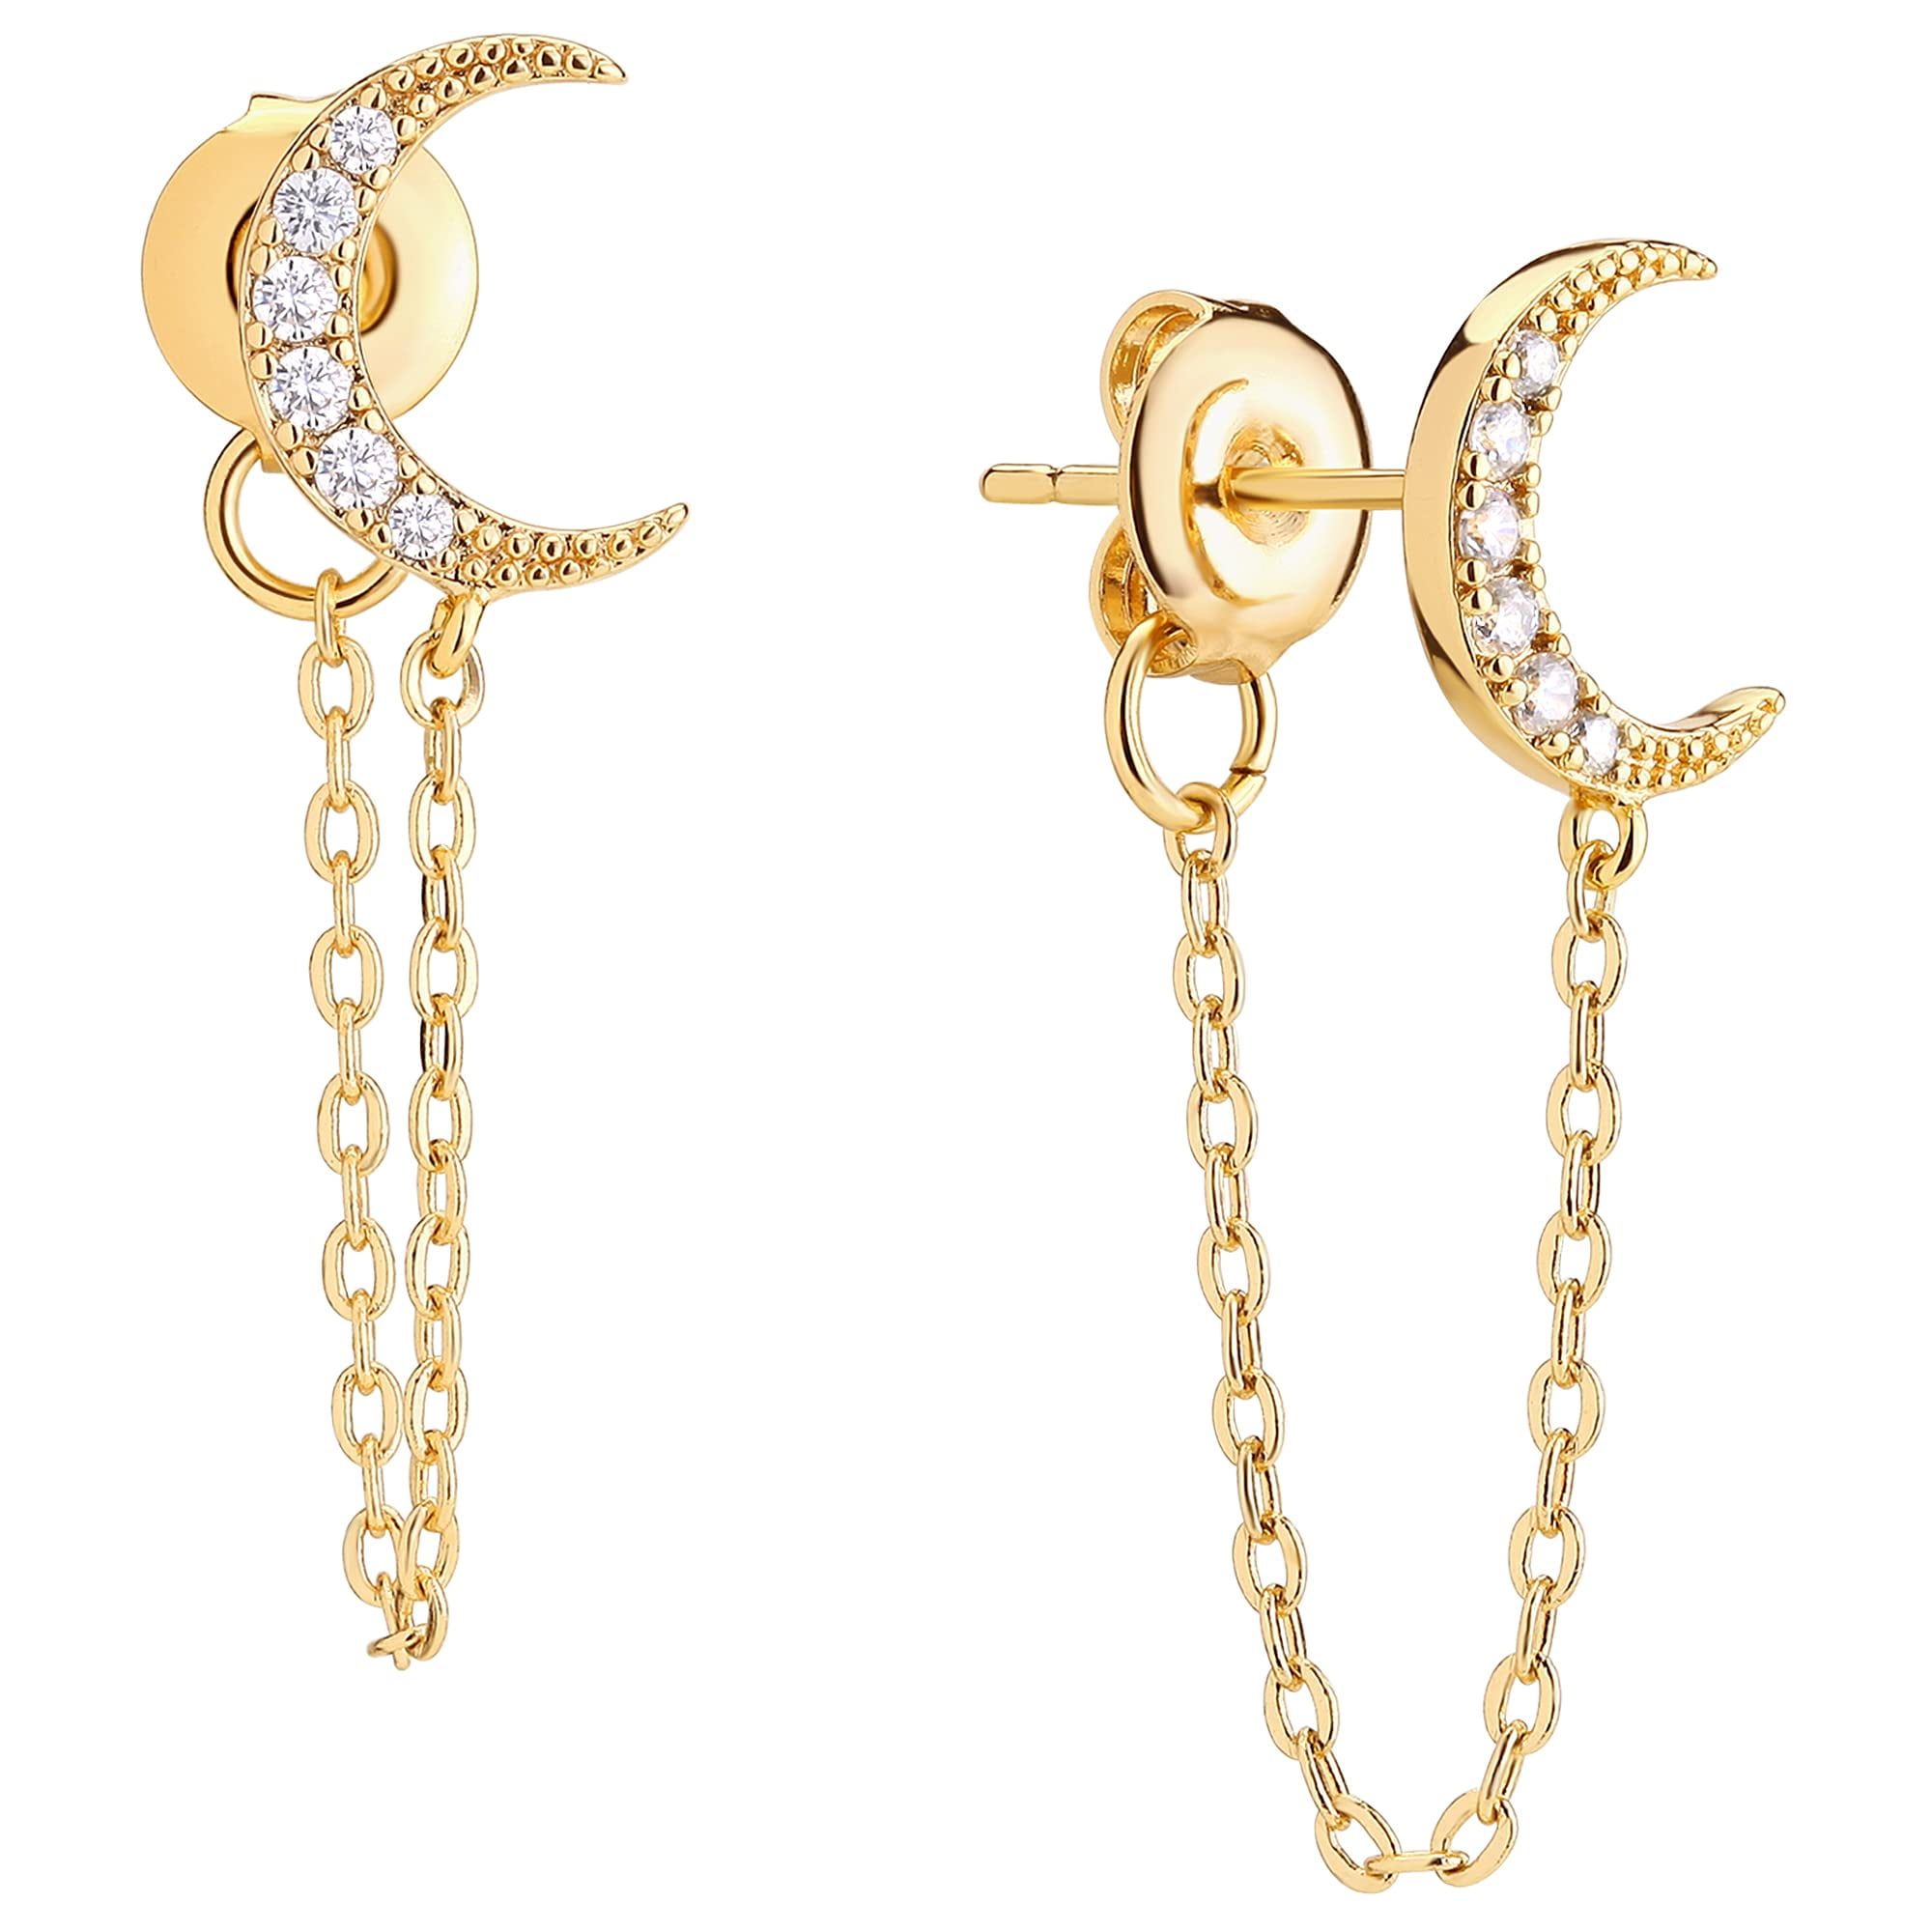 Minimalist Small Crescent Moon Gold Stud Earrings Hypoallergenic for Men Women